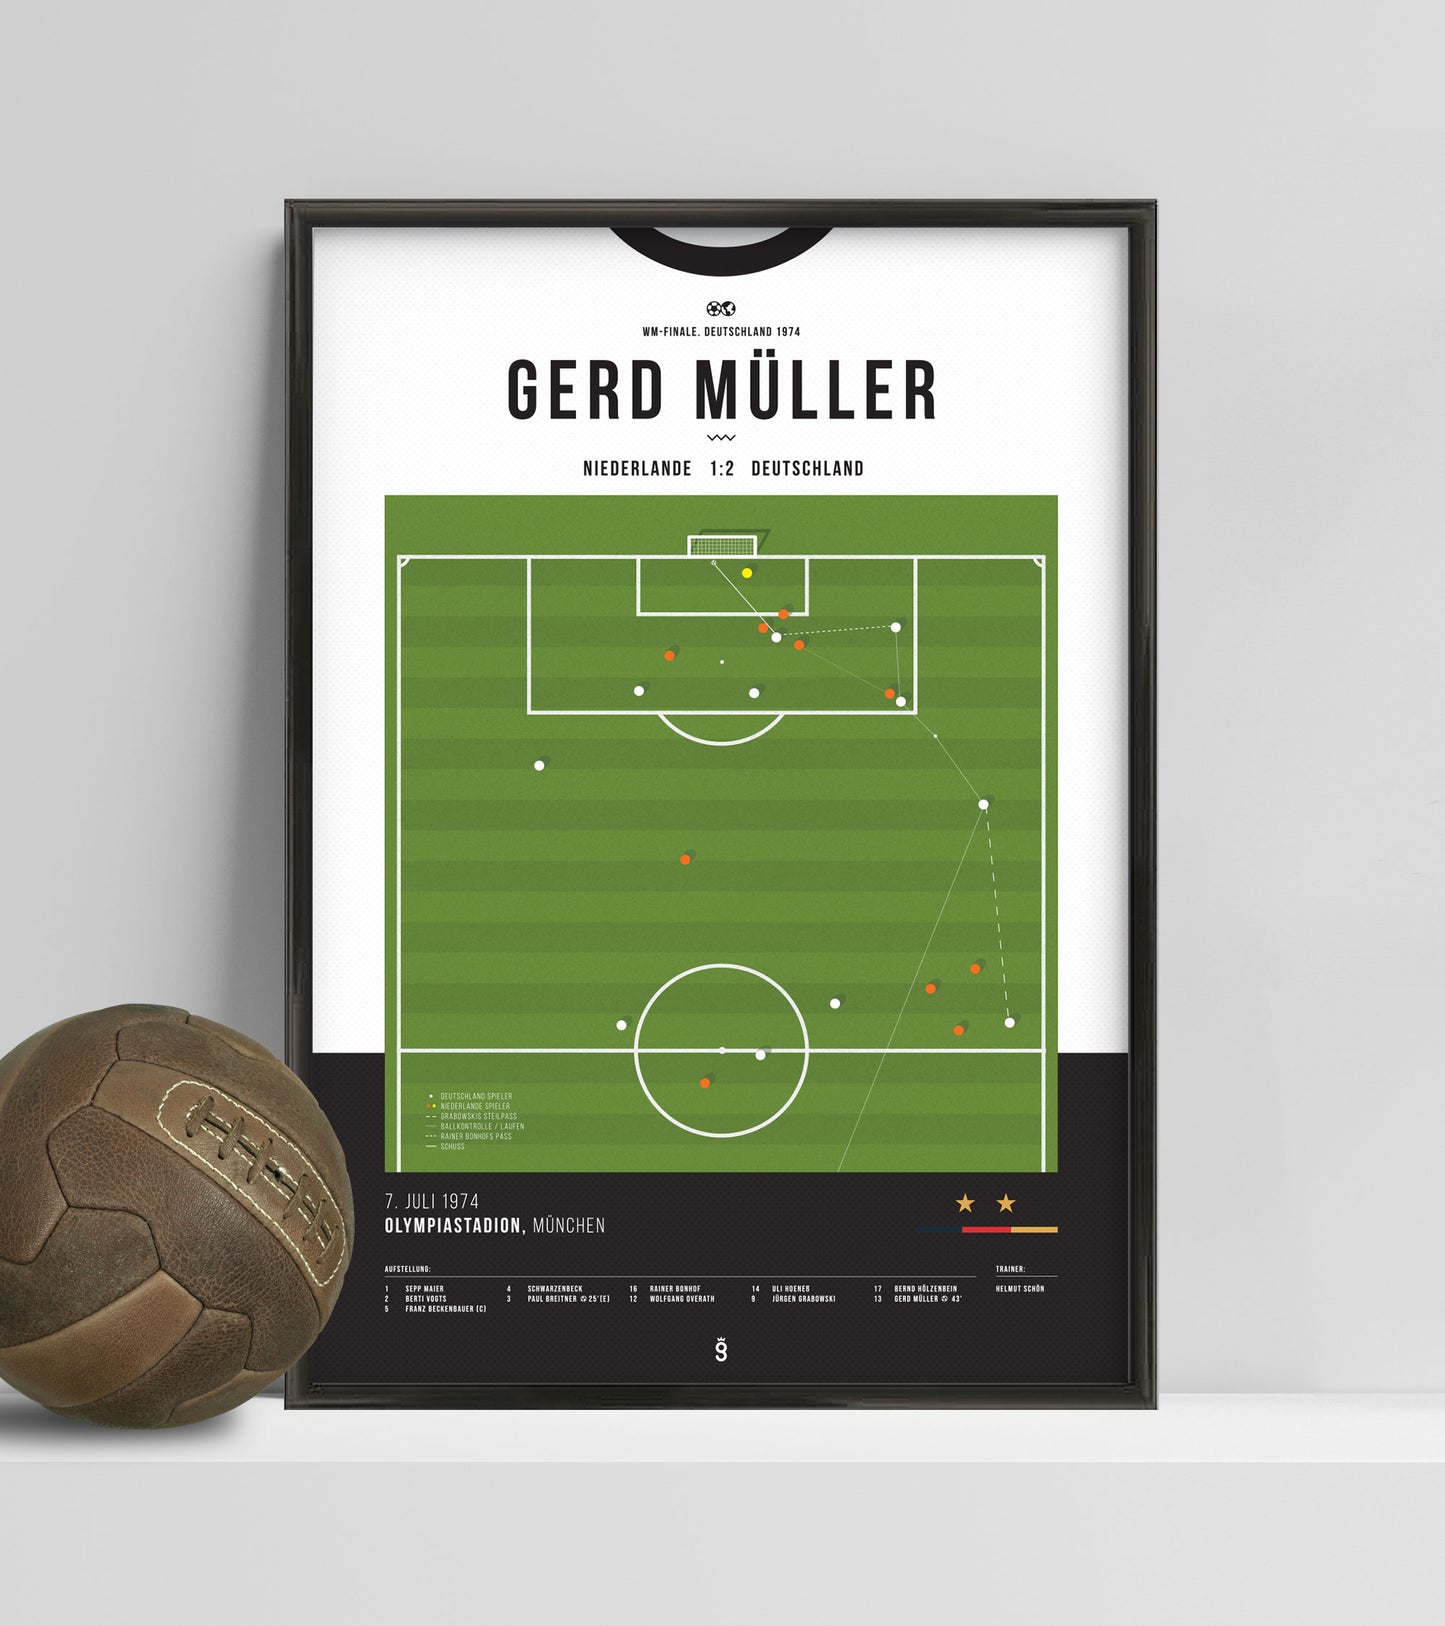 Coupe du monde 1974 : Gerd Muller